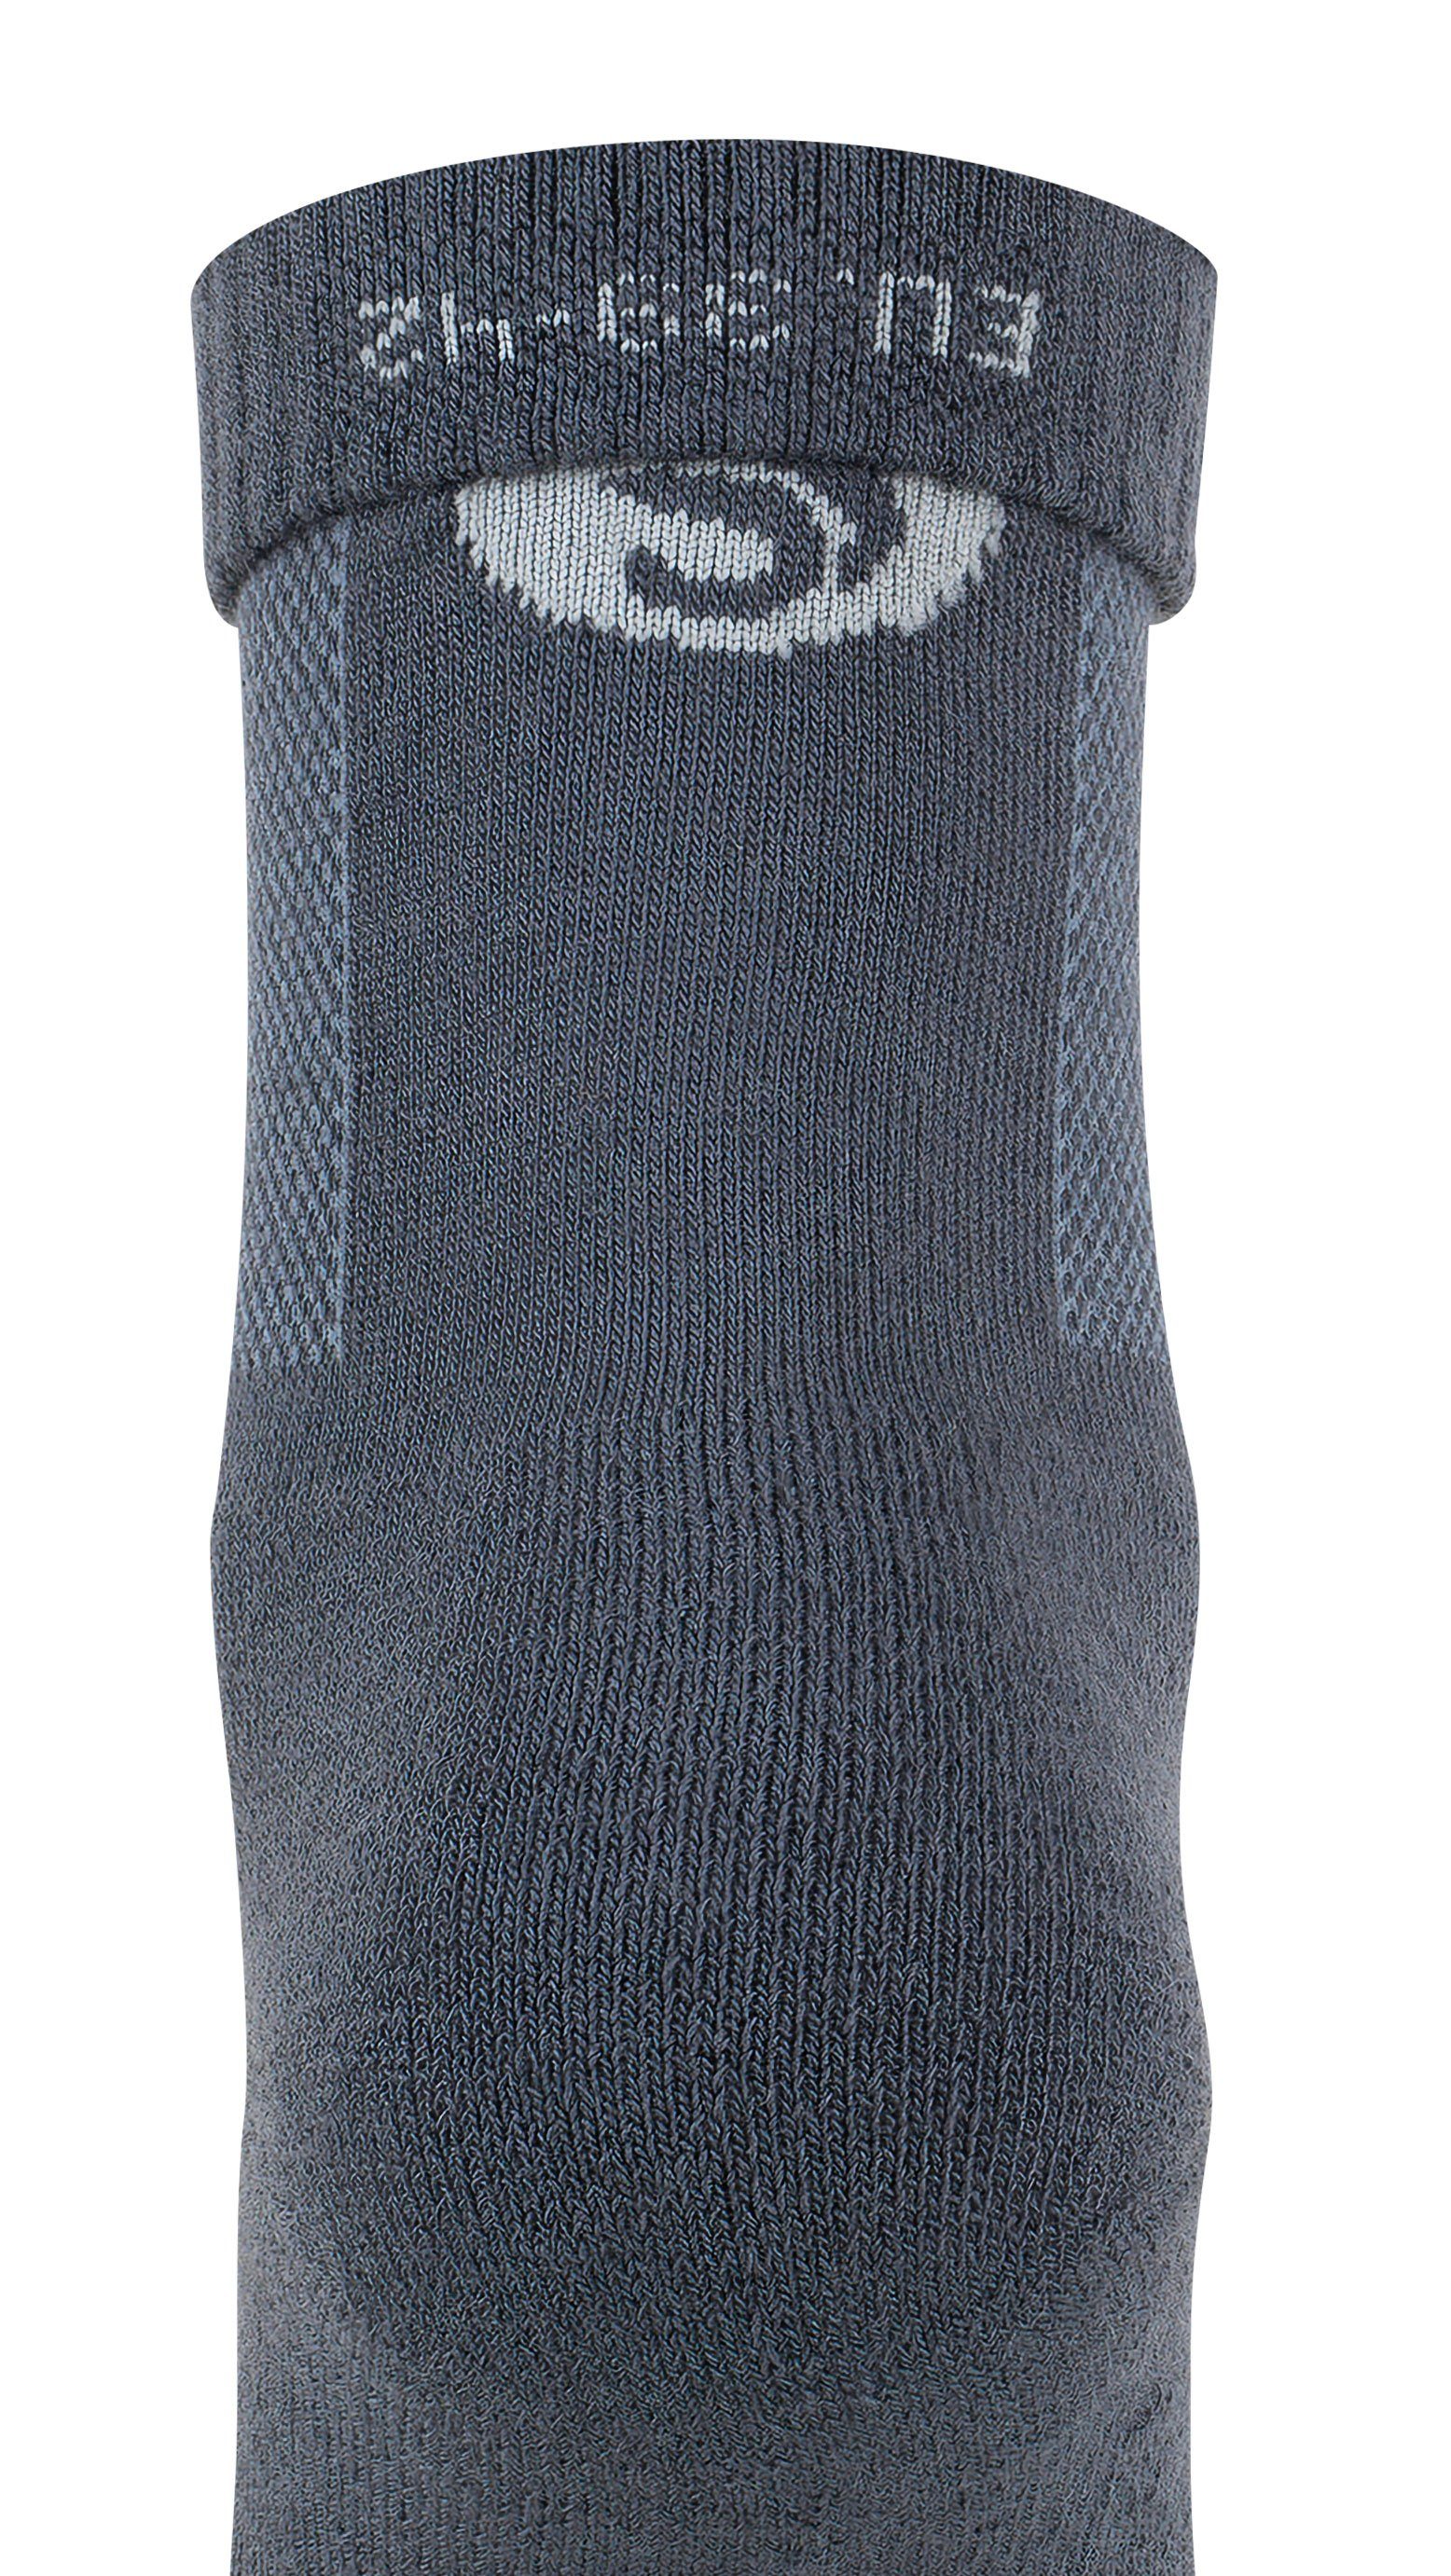 Stark Soul® Funktionssocken Merino Outdoor Socken, Grau Paar Trekking (1-Paar) 1 oder 3 Unisex